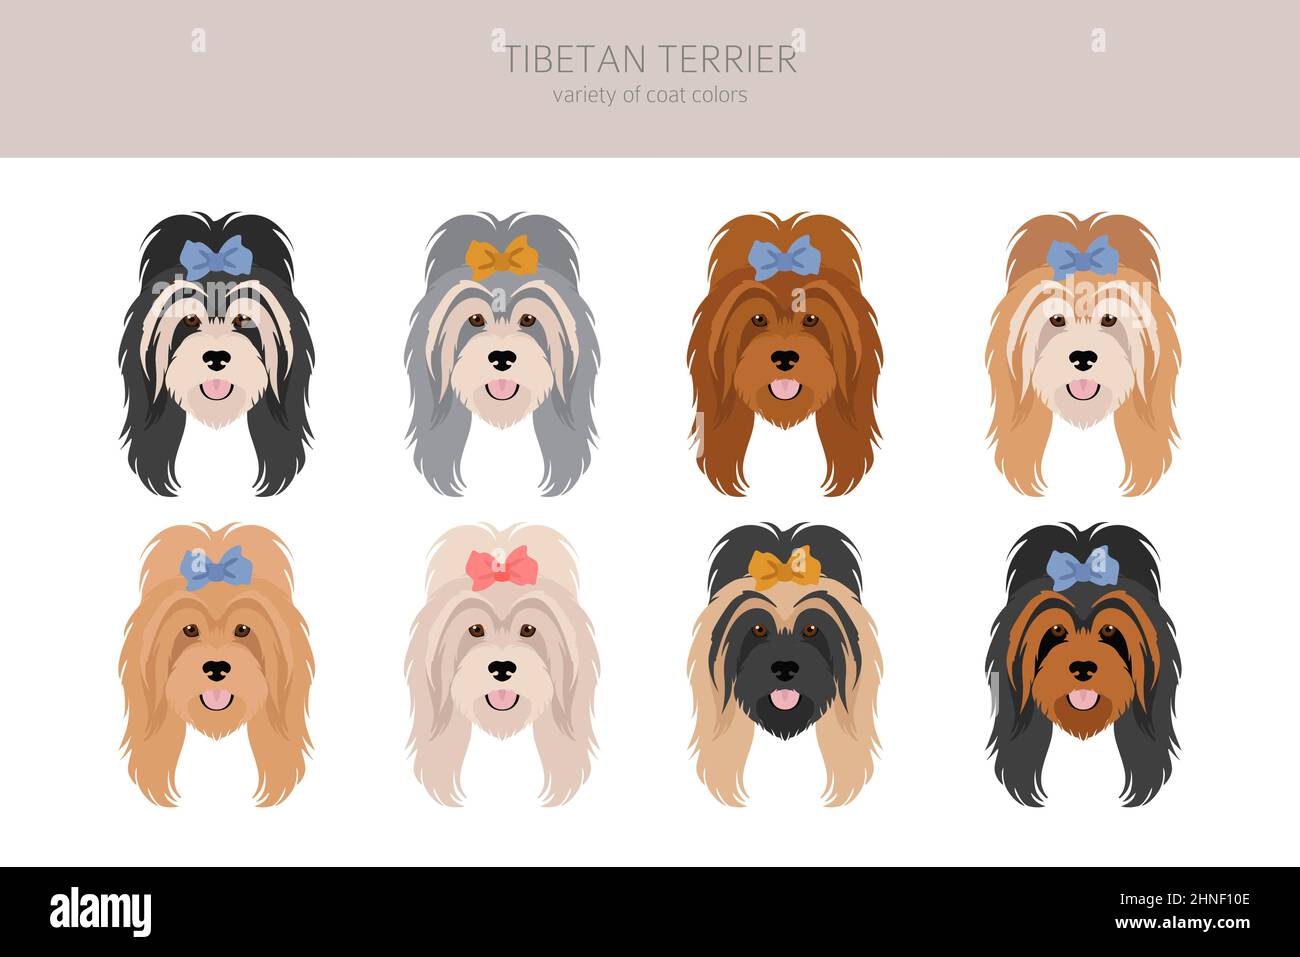 Tibetan terrier clipart. Different poses, coat colors set.  Vector illustration Stock Vector